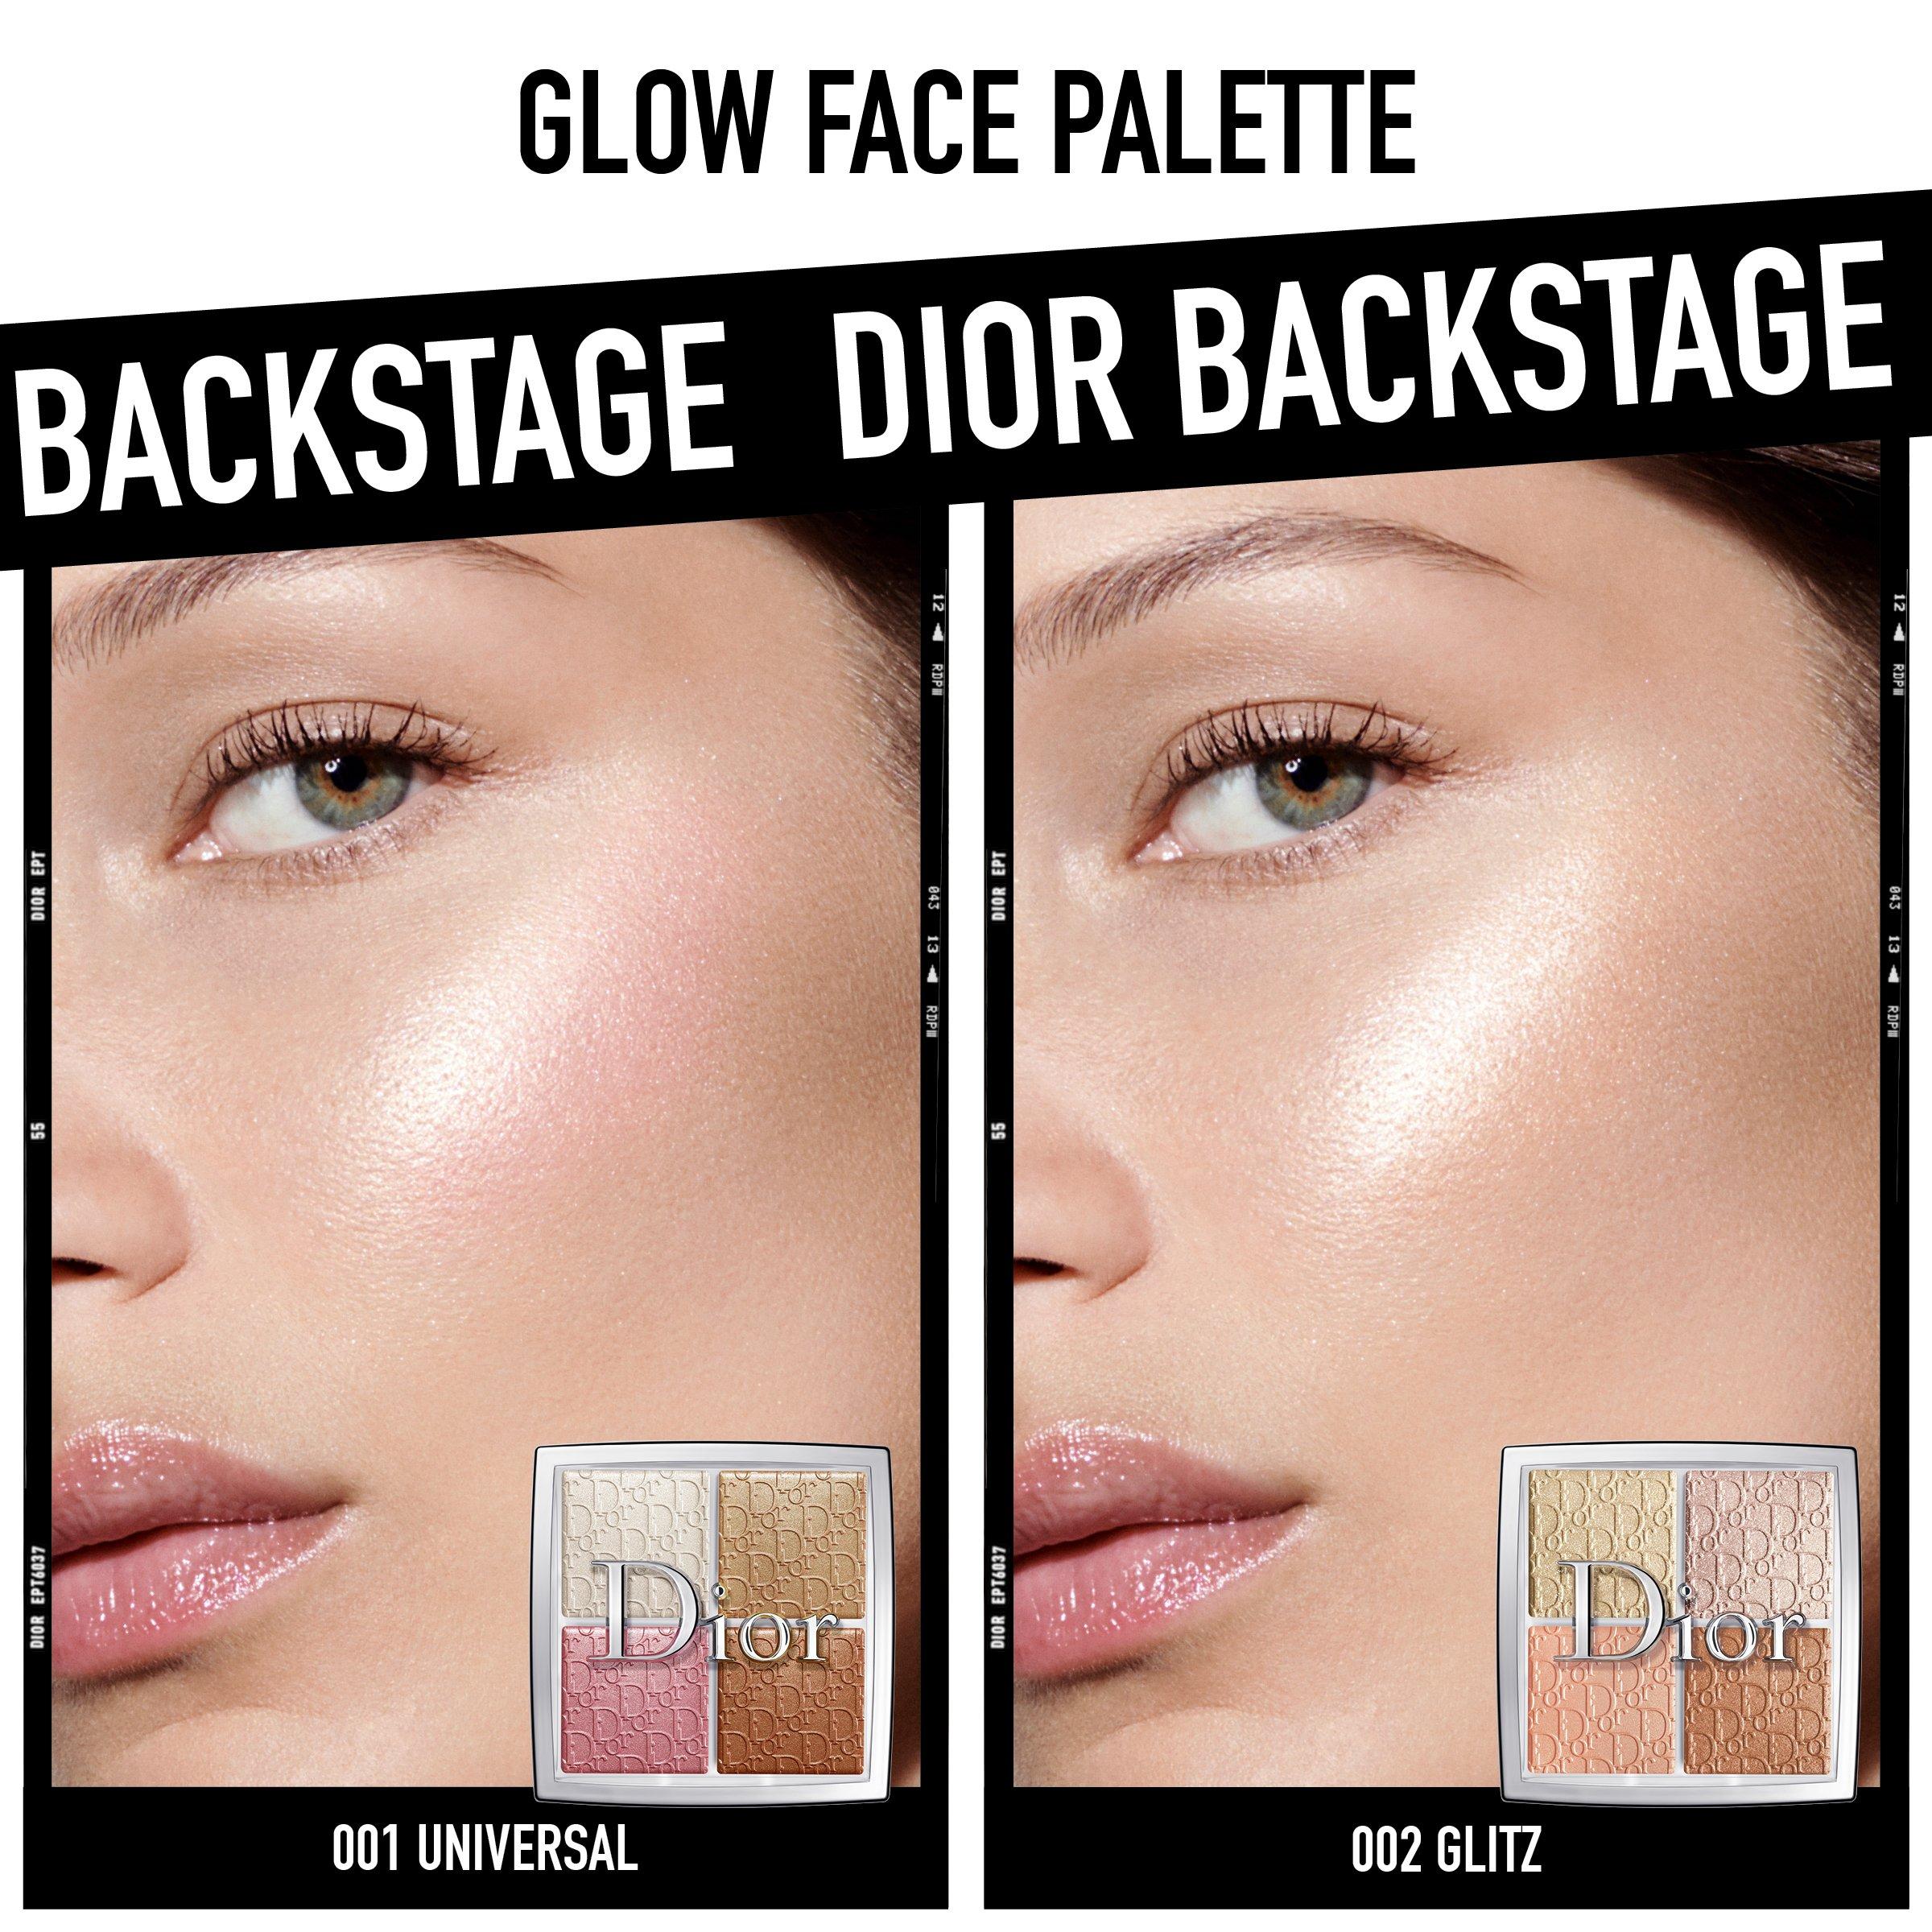 DIOR BACKSTAGE  Glow Face Palette 